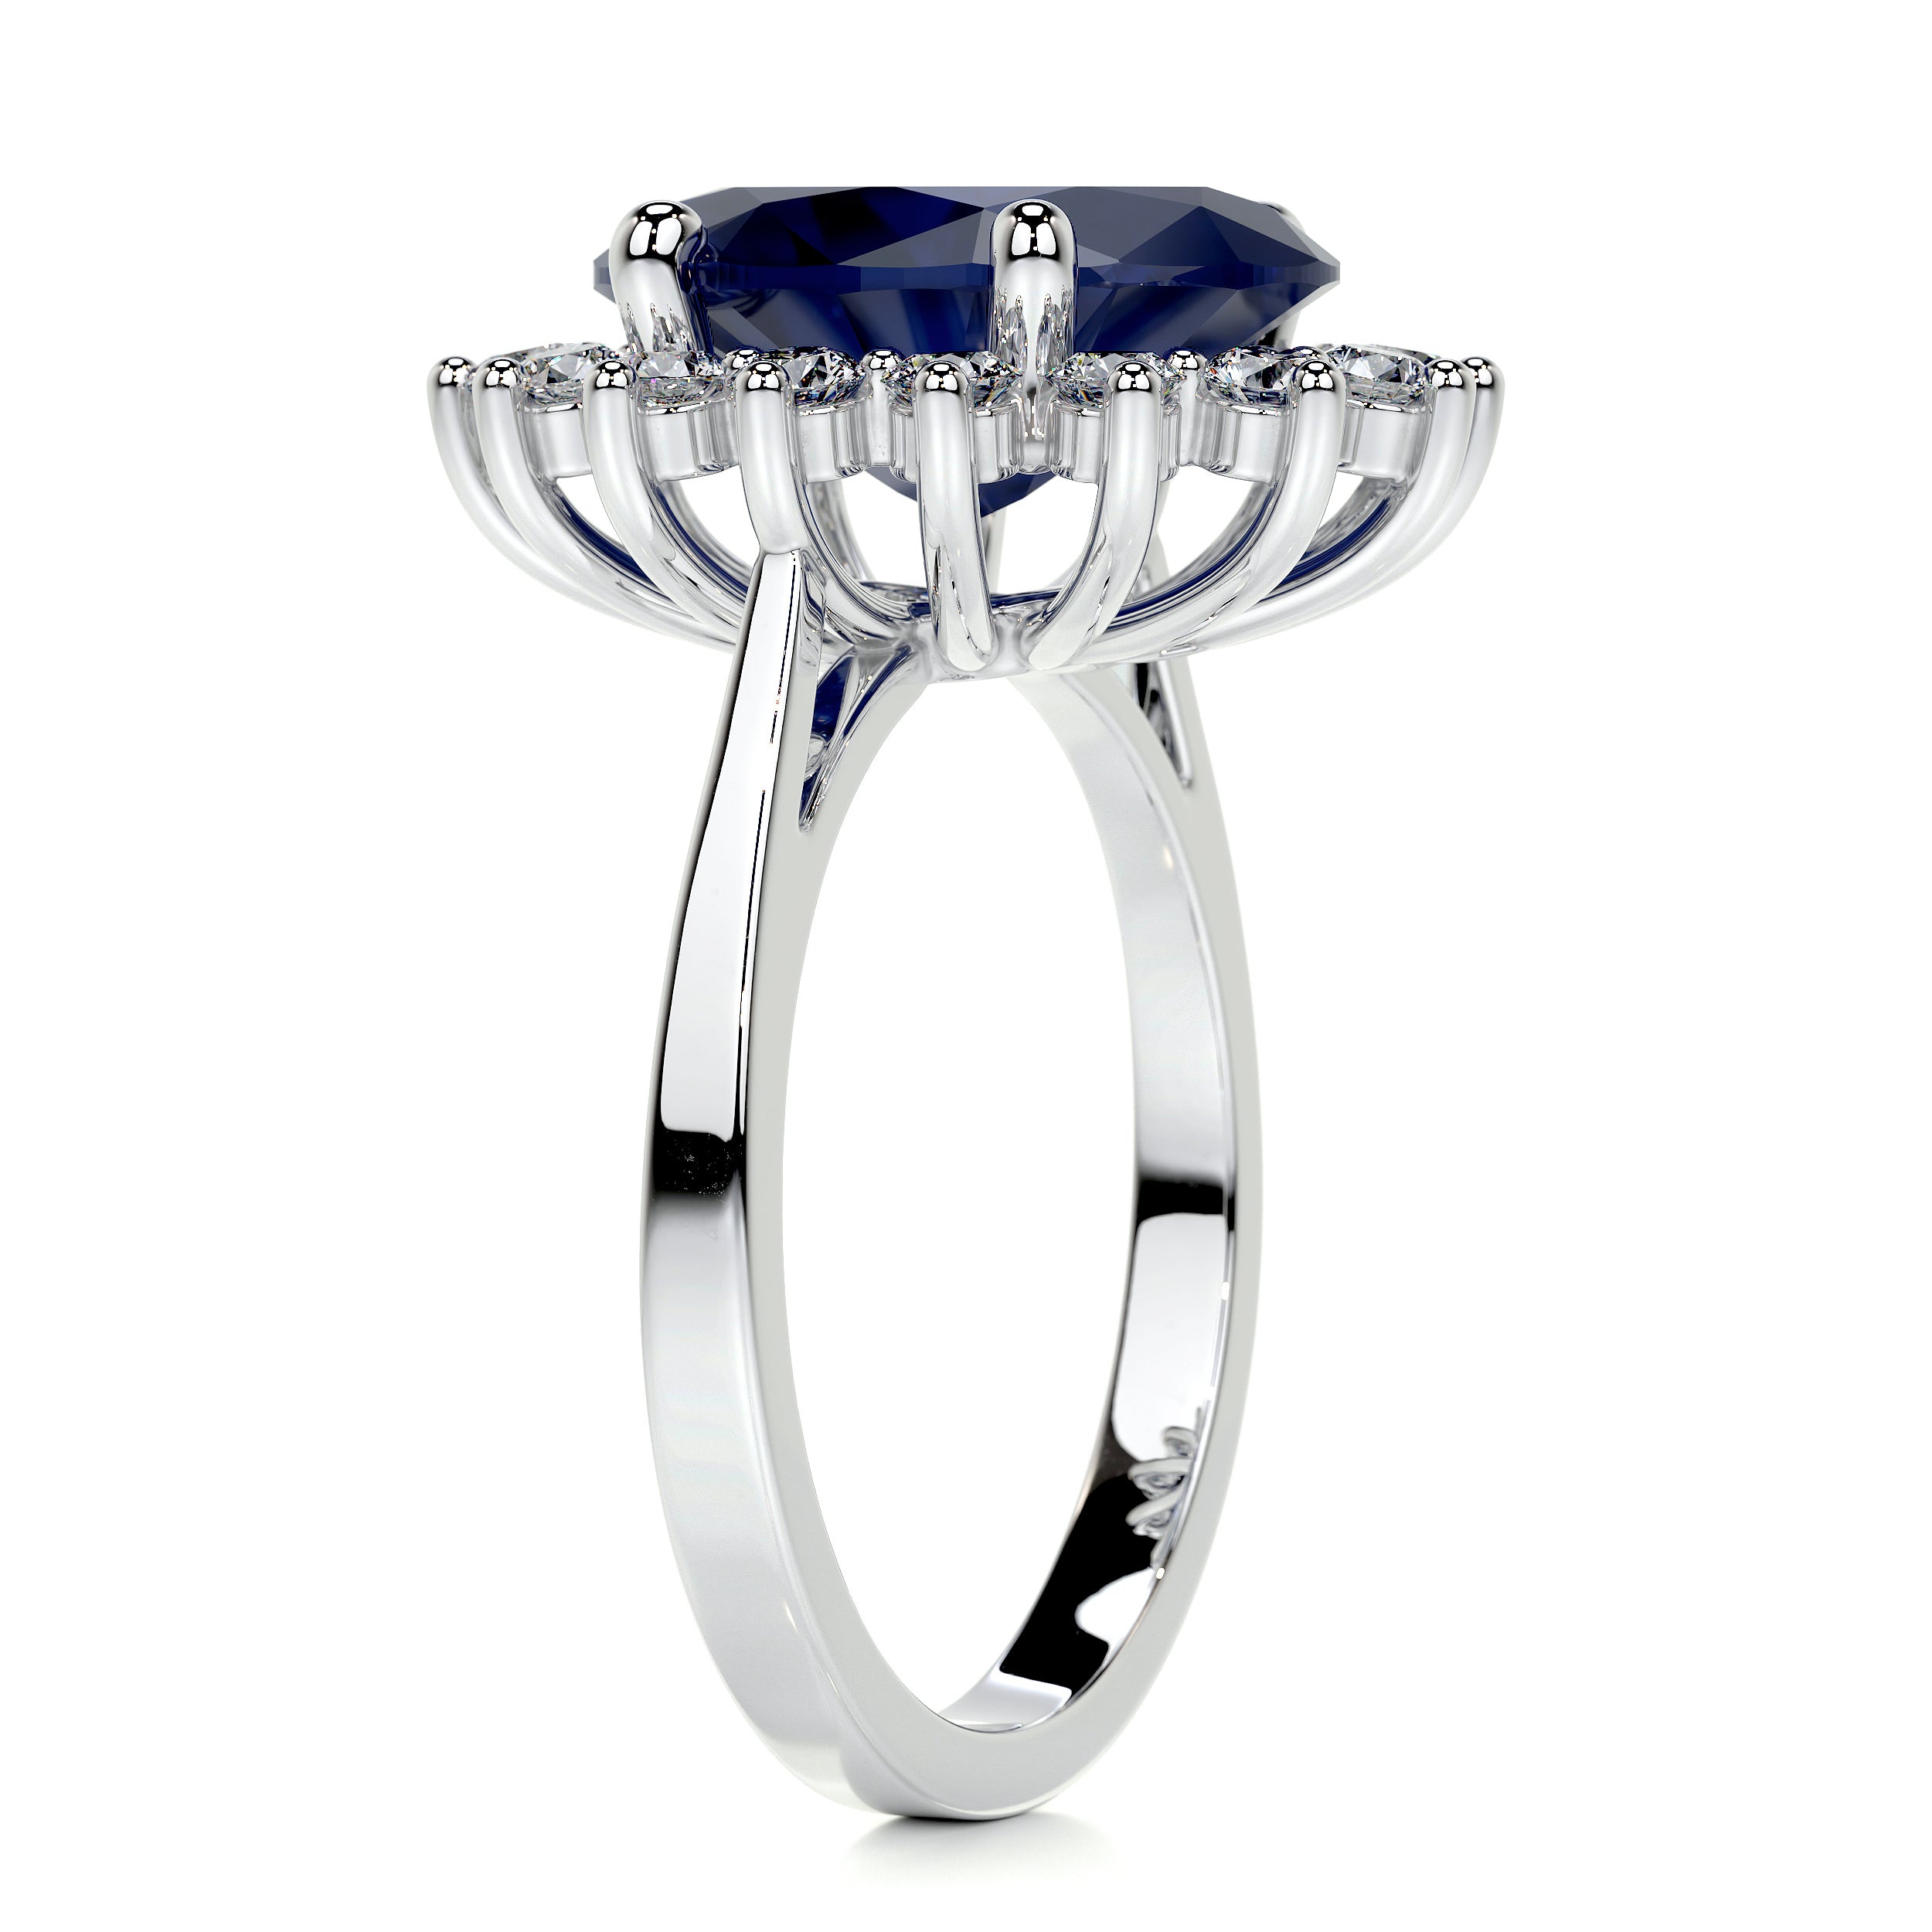 Lyn Gemstone & Diamonds Ring   (7 Carat) - Platinum